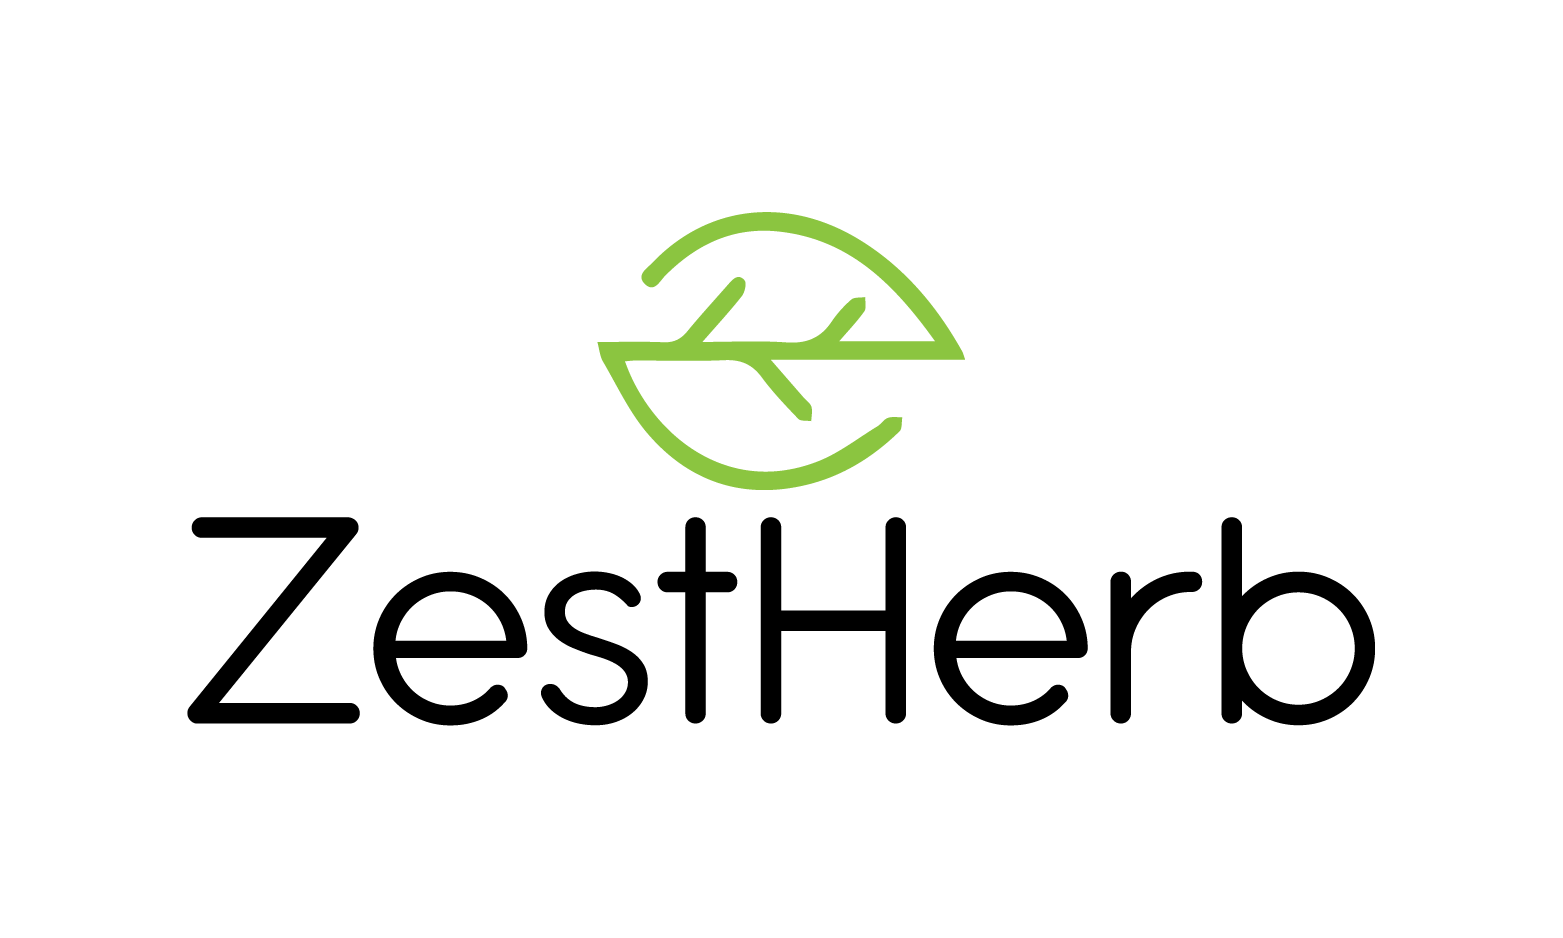 ZestHerb.com - Creative brandable domain for sale